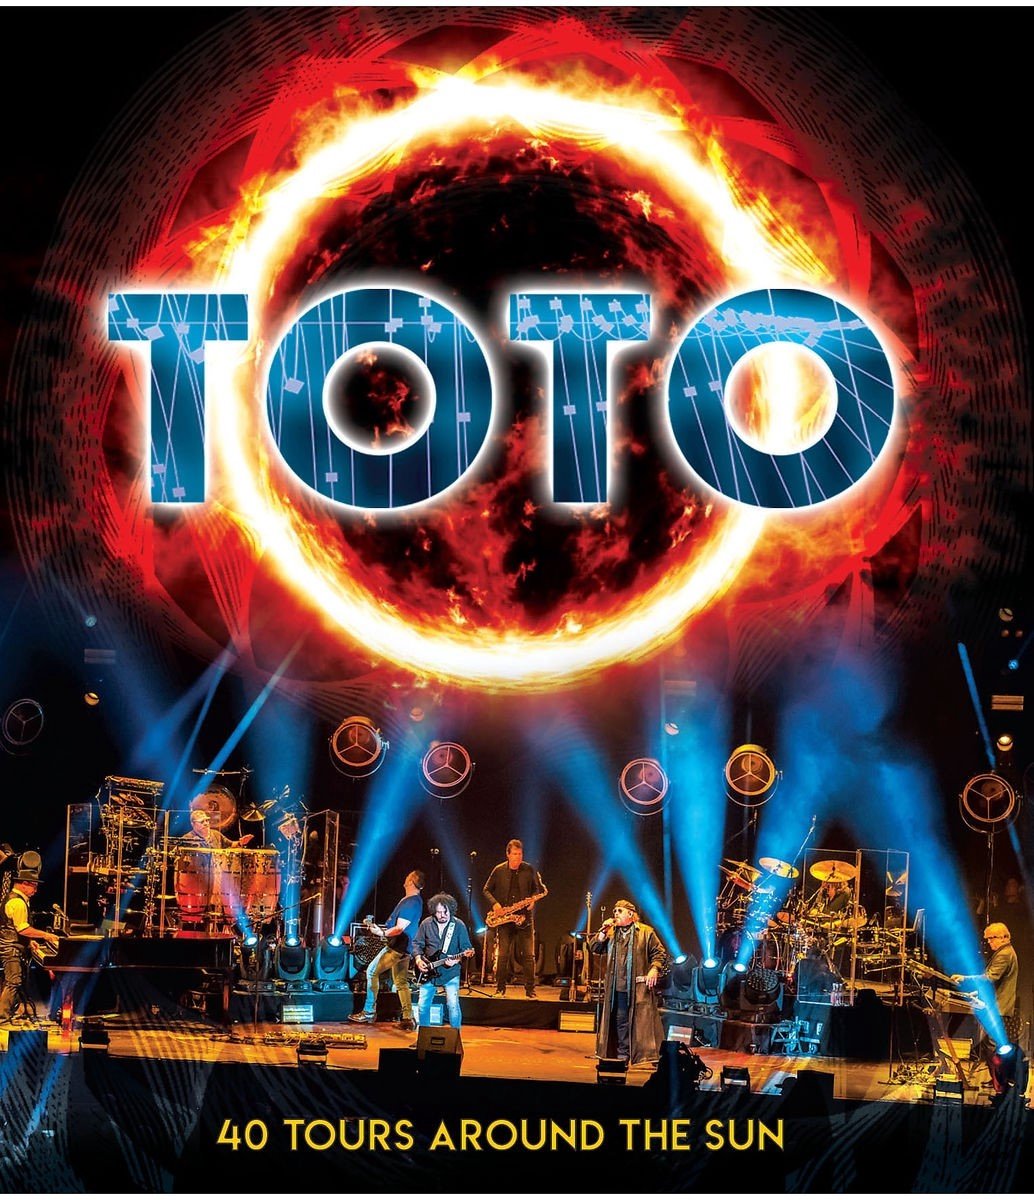 Toto - 40 Tours Around The Sun (Live At The Ziggo Dome) (Blu-ray)